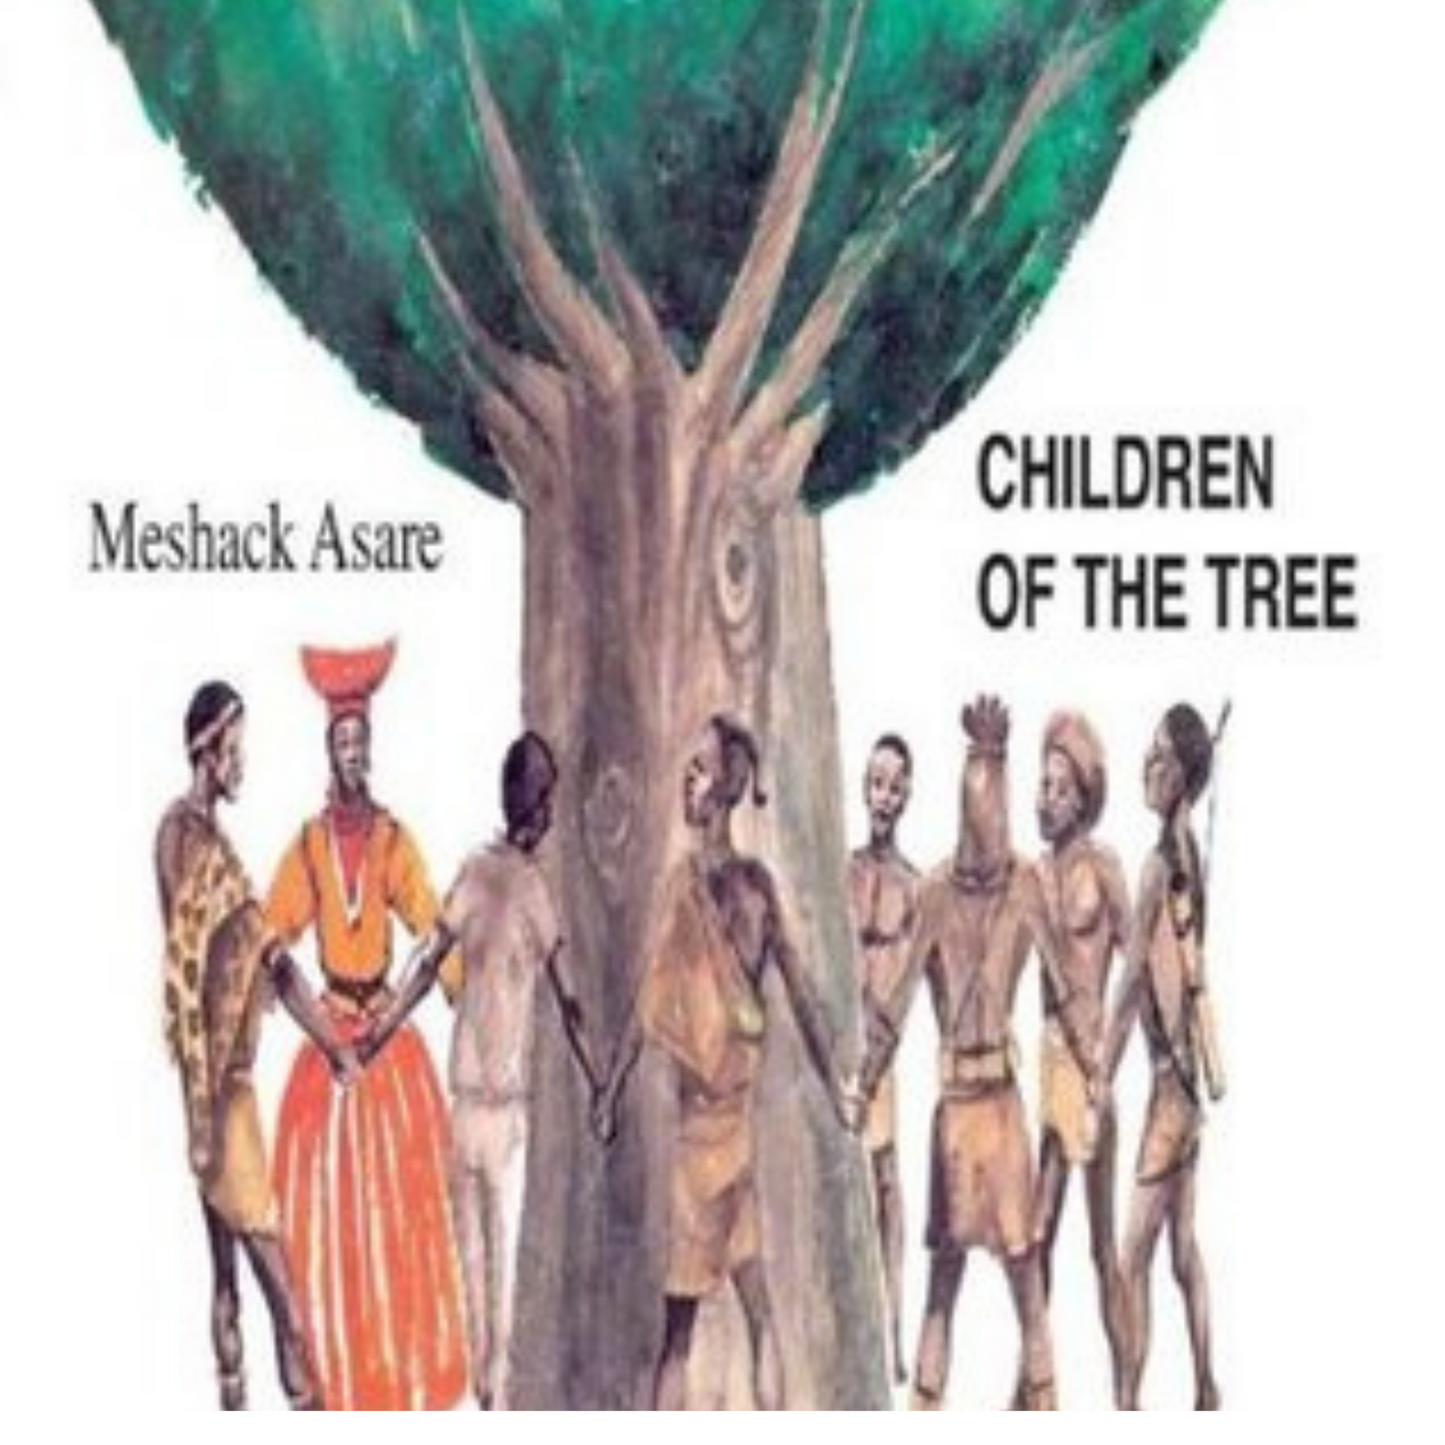 Children of the tree